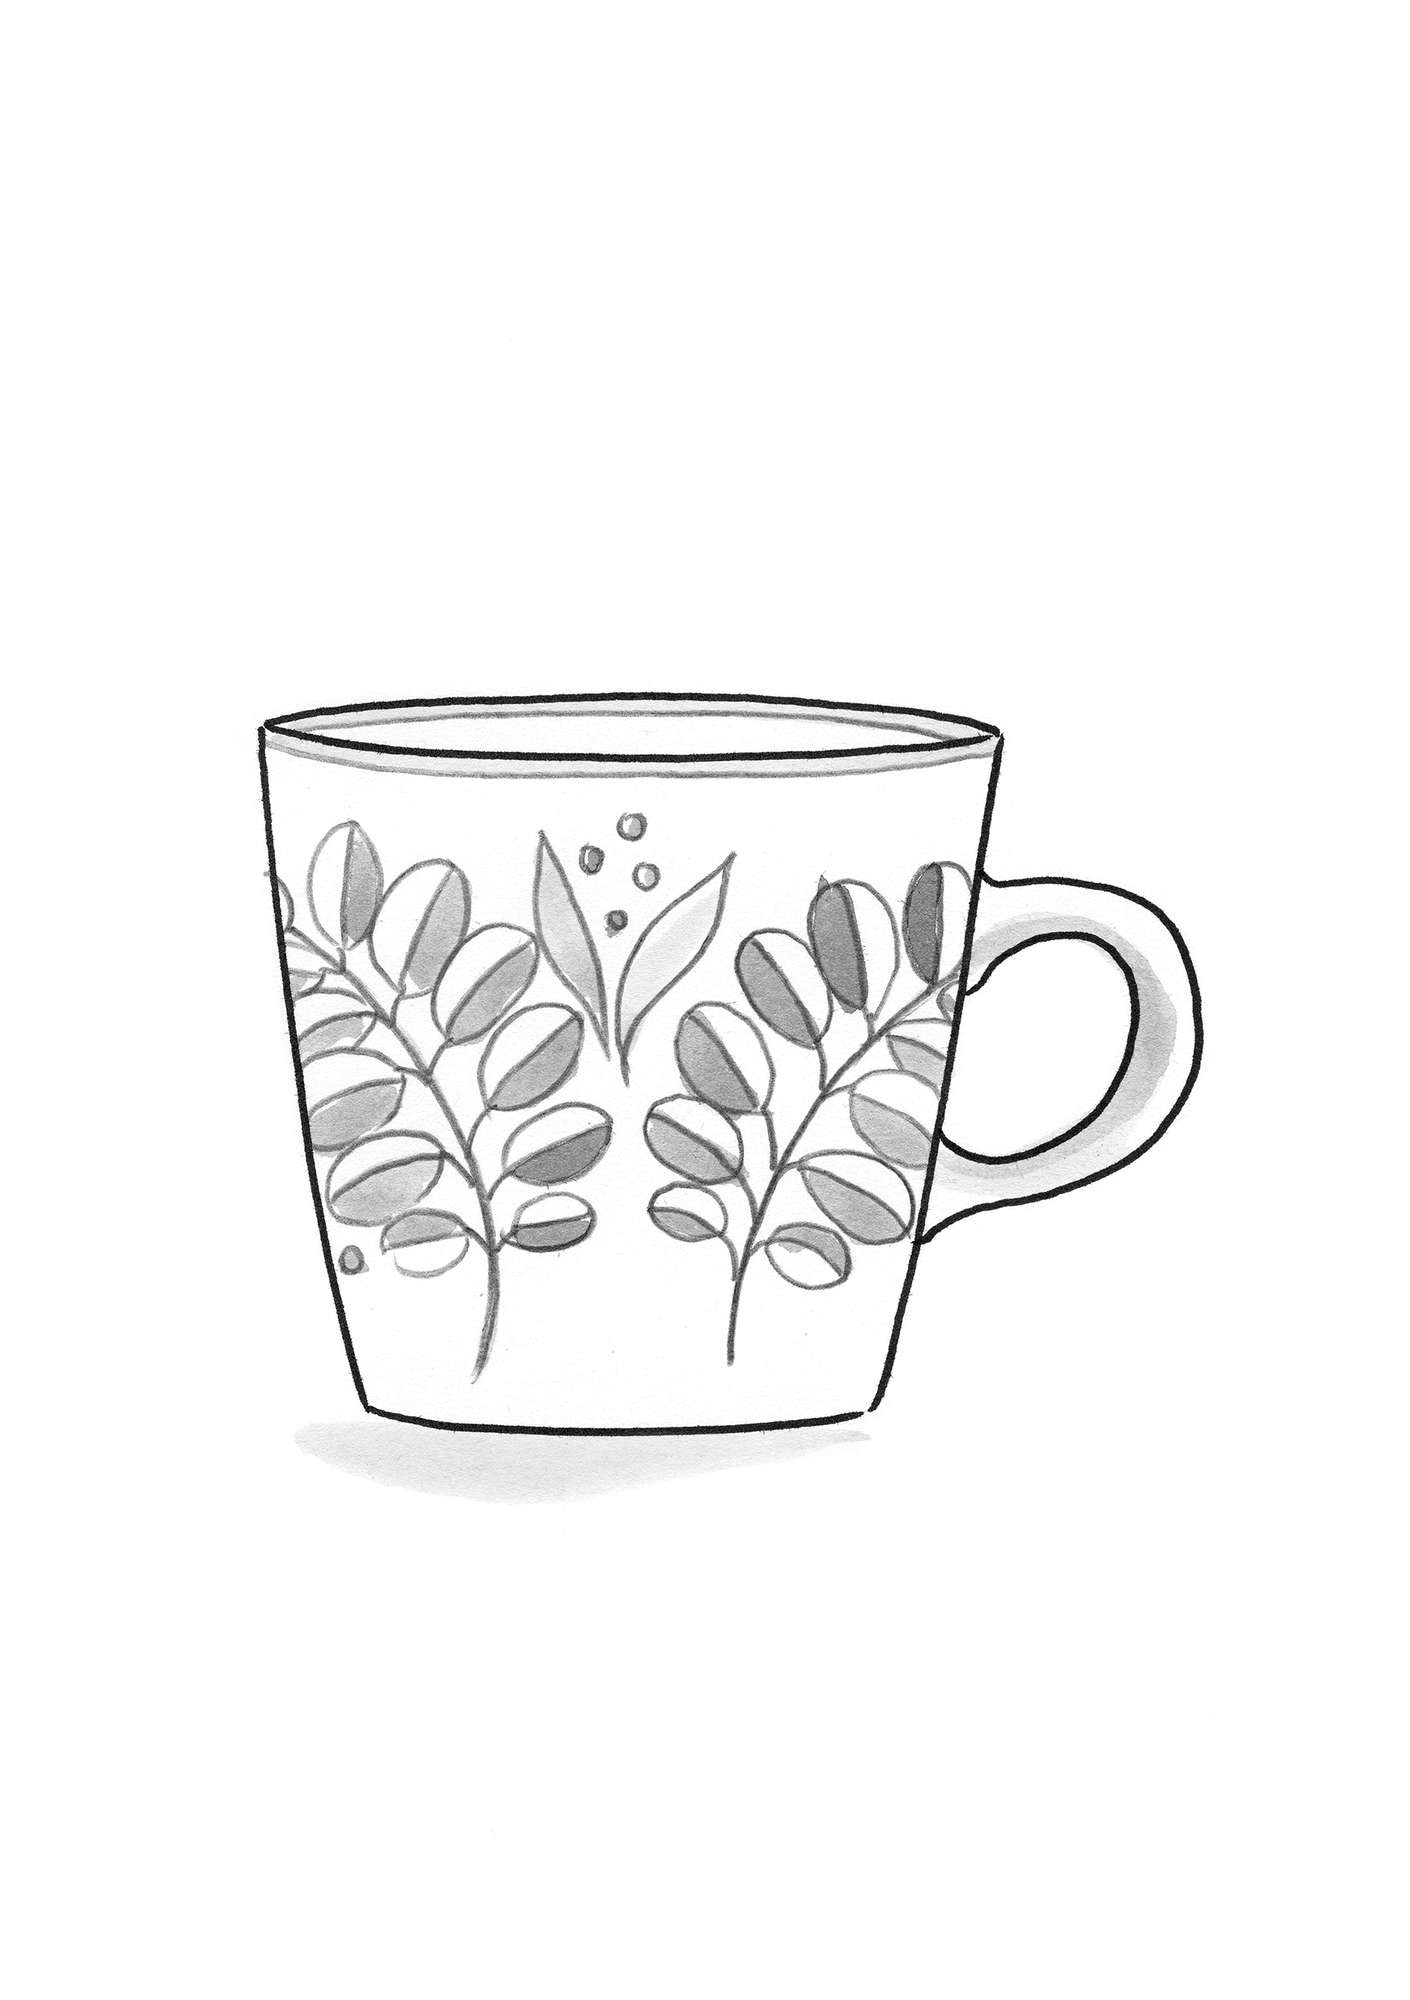 “Meadow” ceramic mug meadow brook